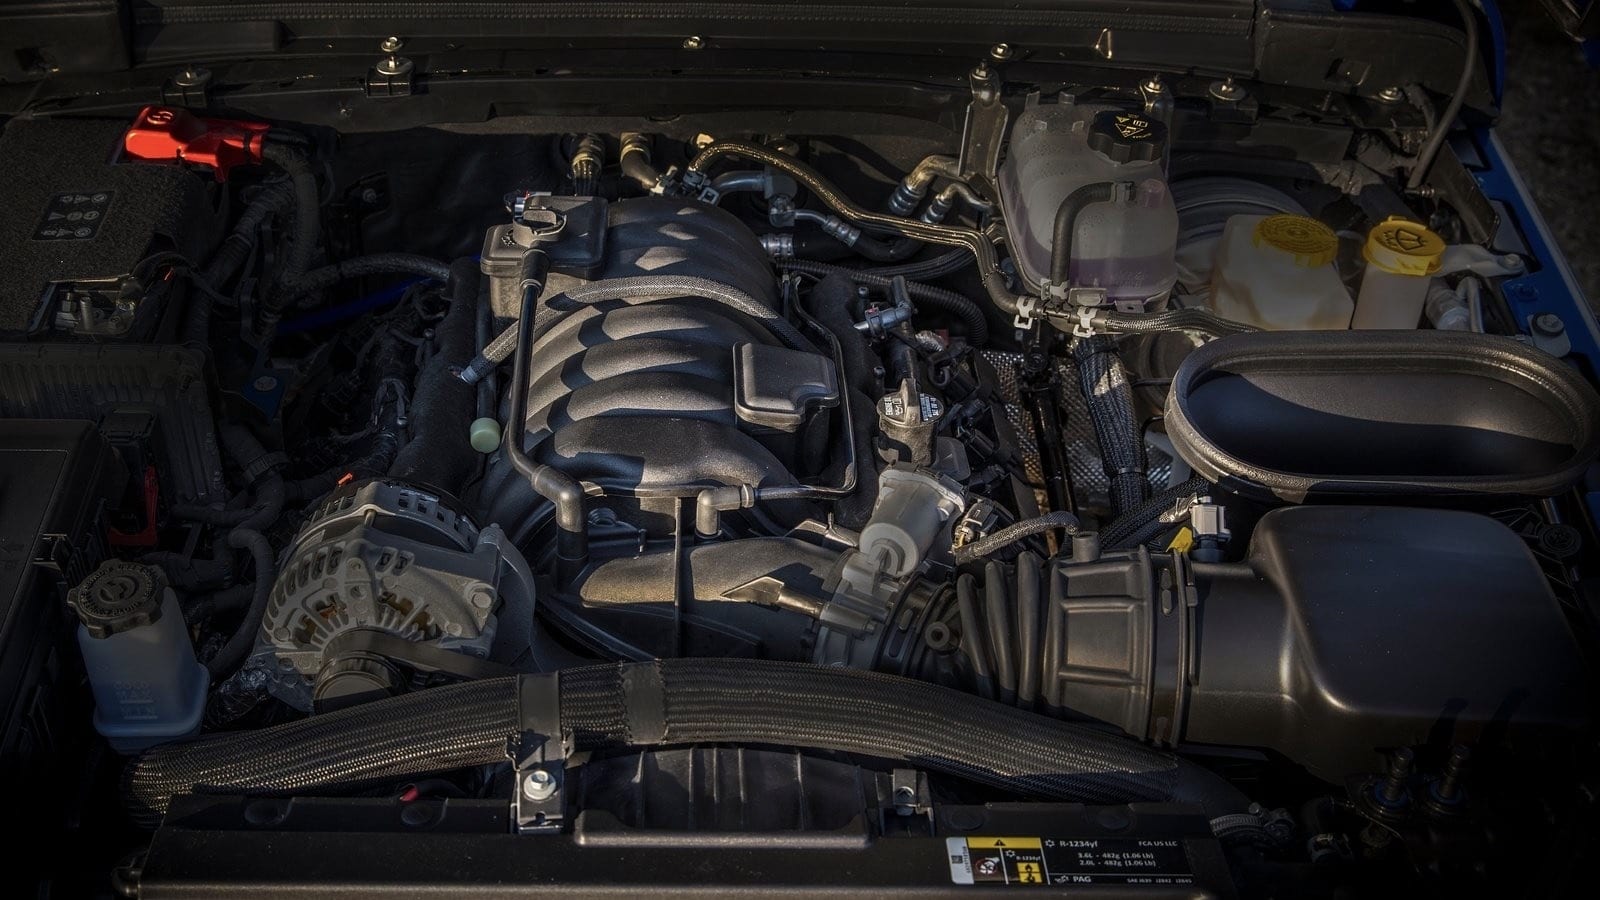 6.4-liter HEMI V8 with 470 hp / 470 lb-ft of torque